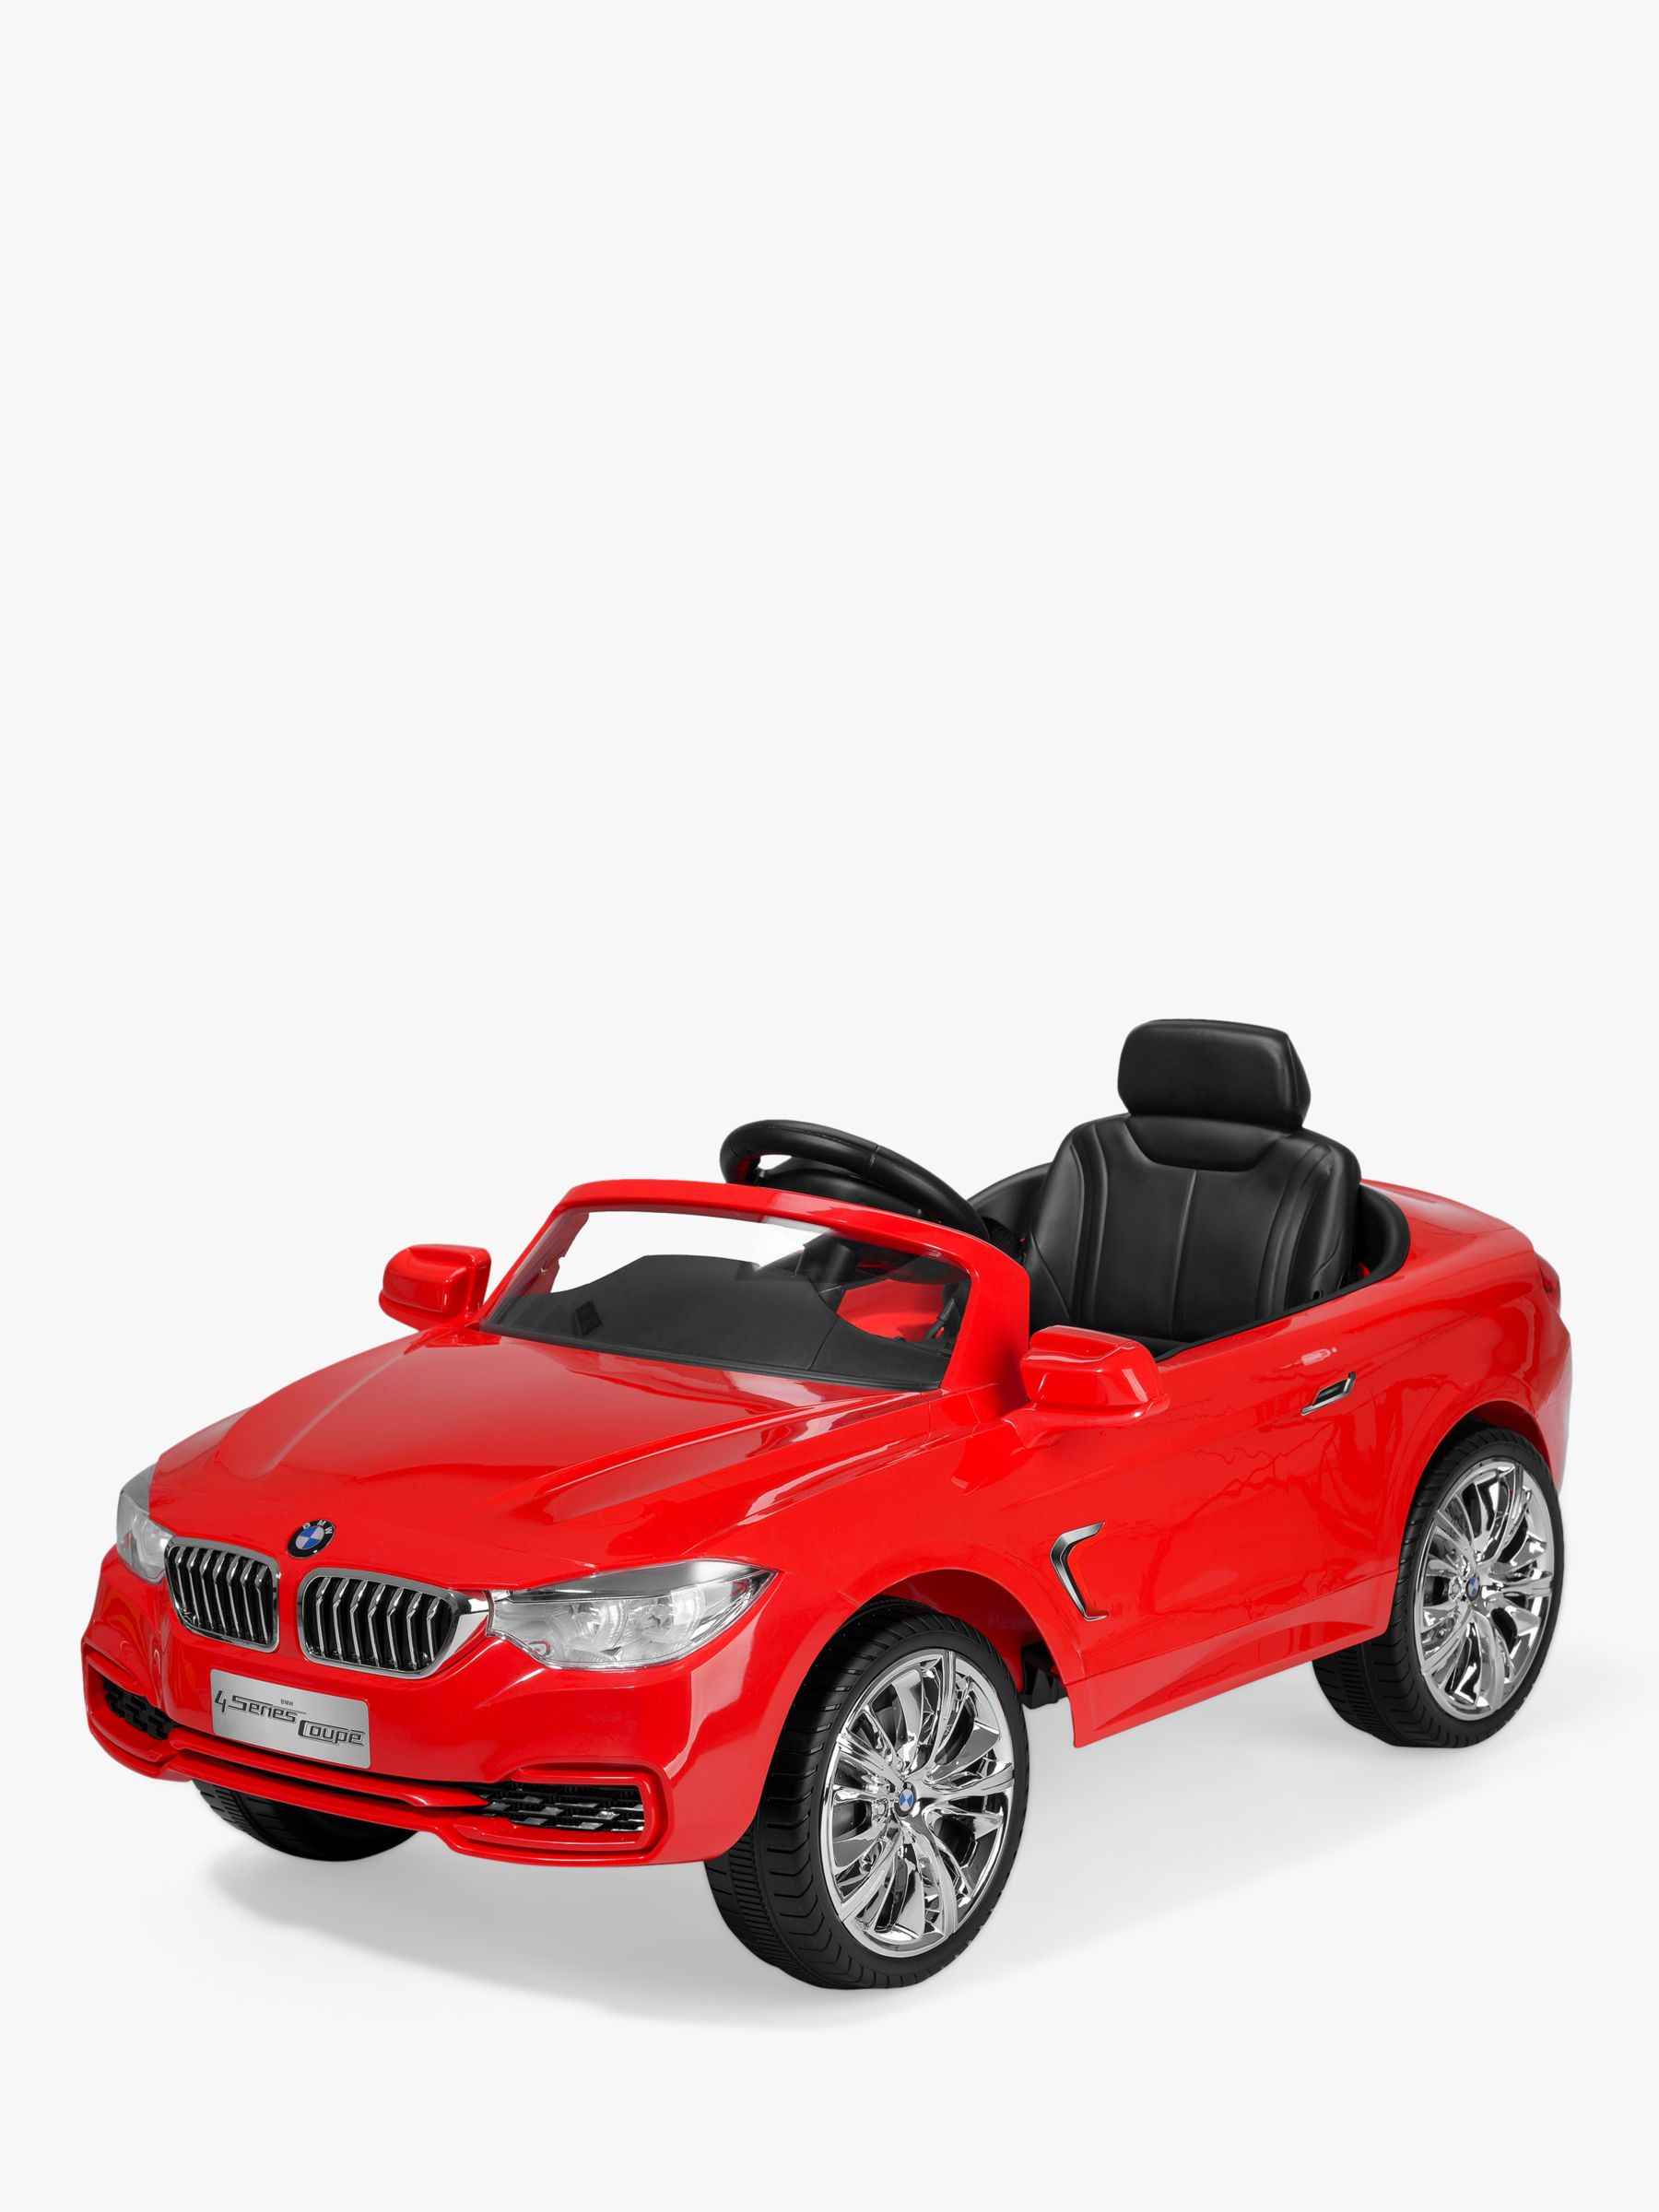 bmw 4 series toy car